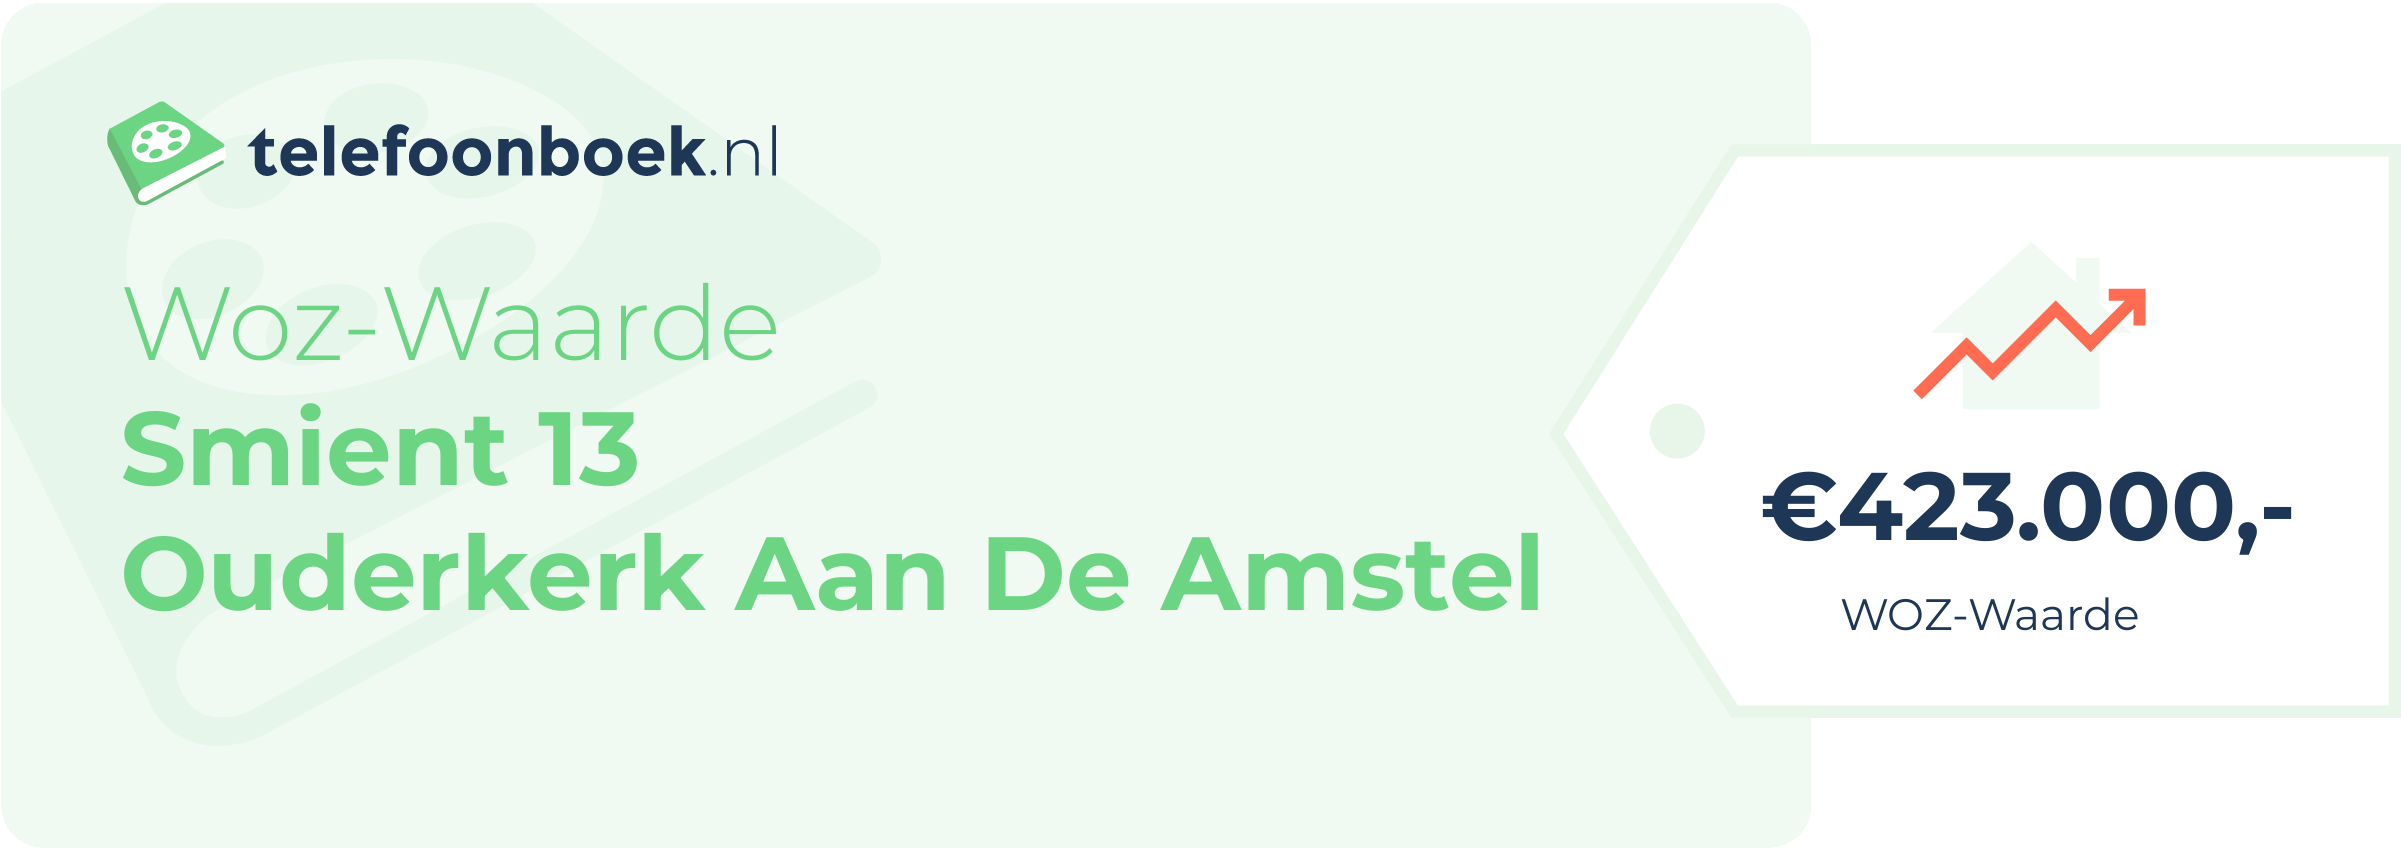 WOZ-waarde Smient 13 Ouderkerk Aan De Amstel